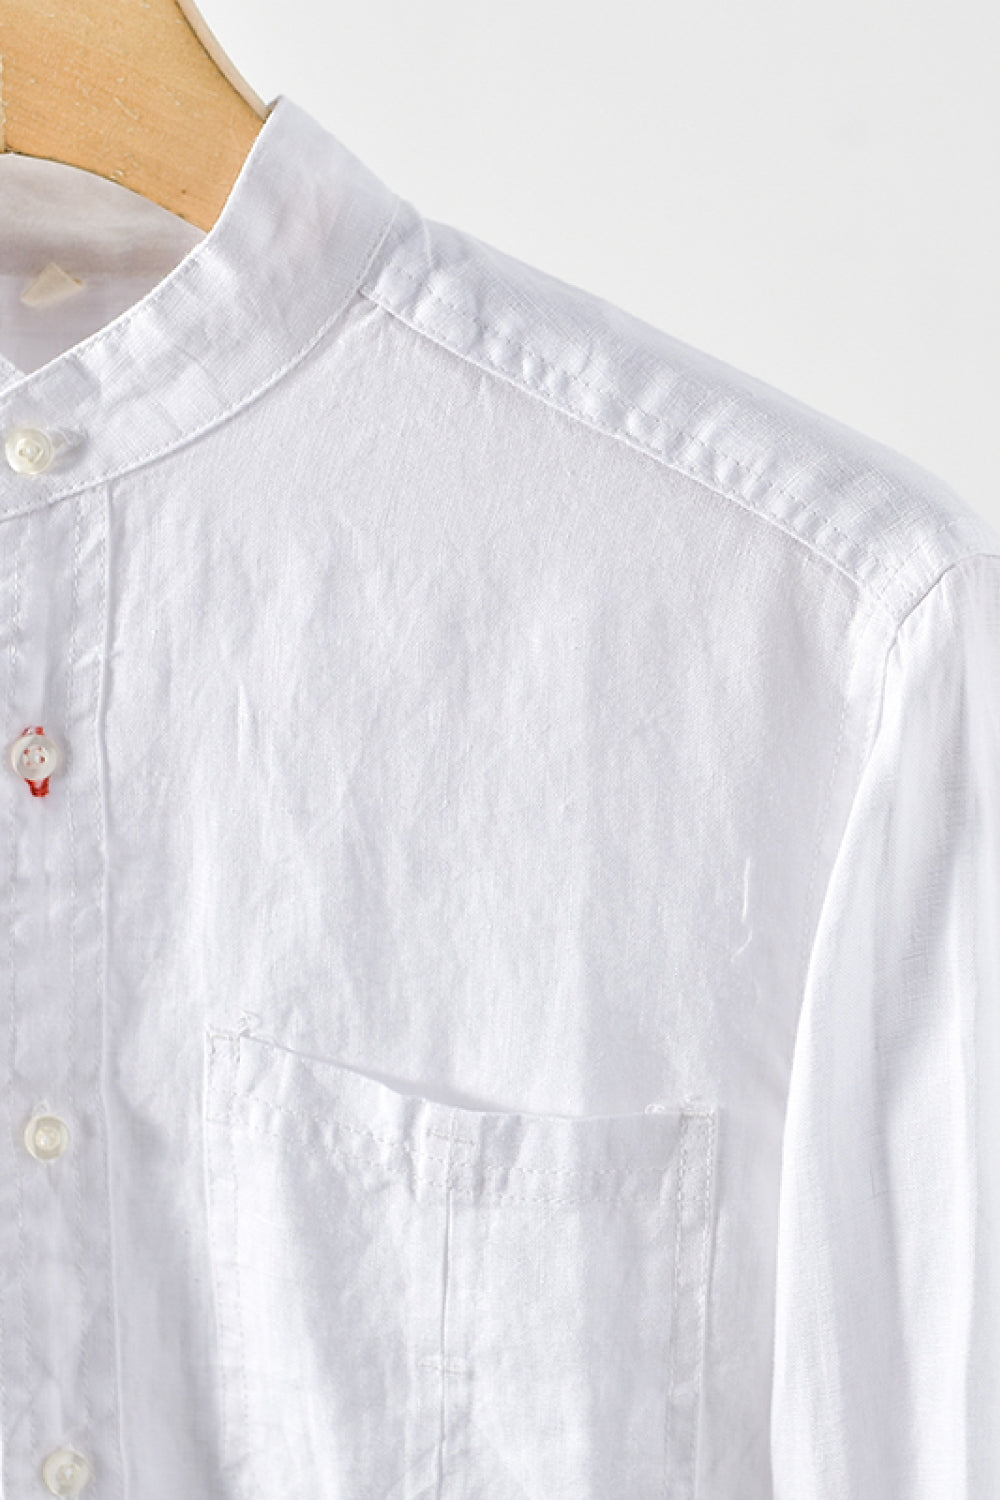 High-Low Buttoned Round Neck Long Sleeve Linen Shirt